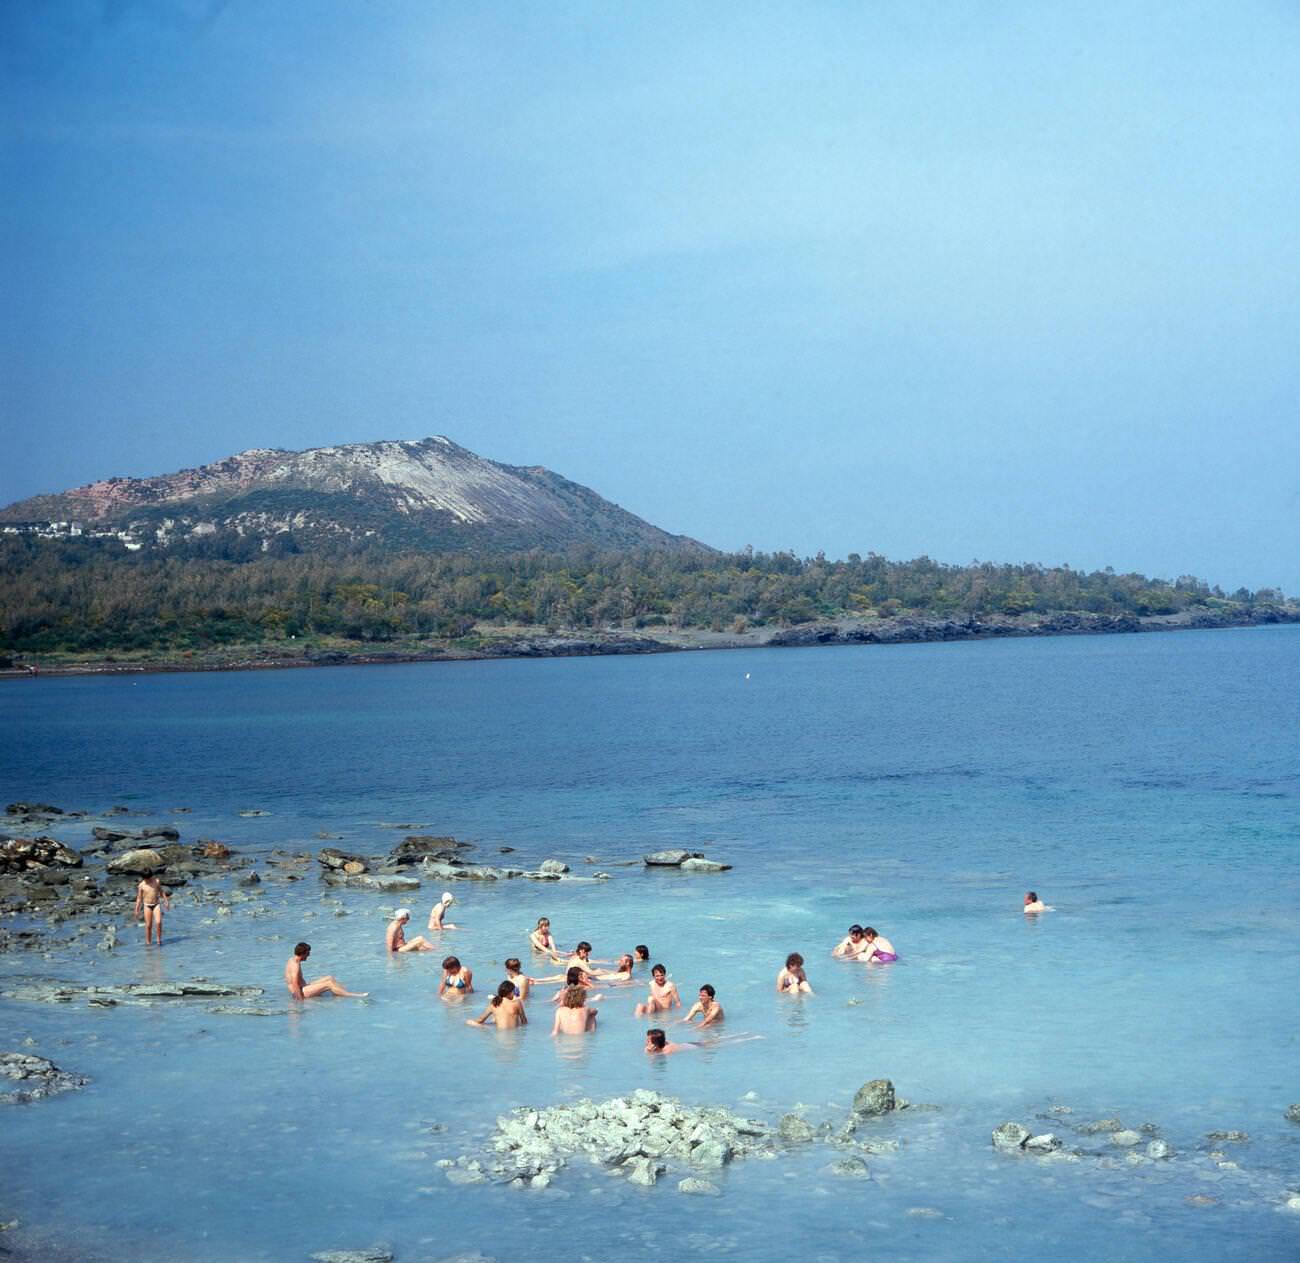 The sulfur springs of Vulcano Island, Sicily, in the 1970s.